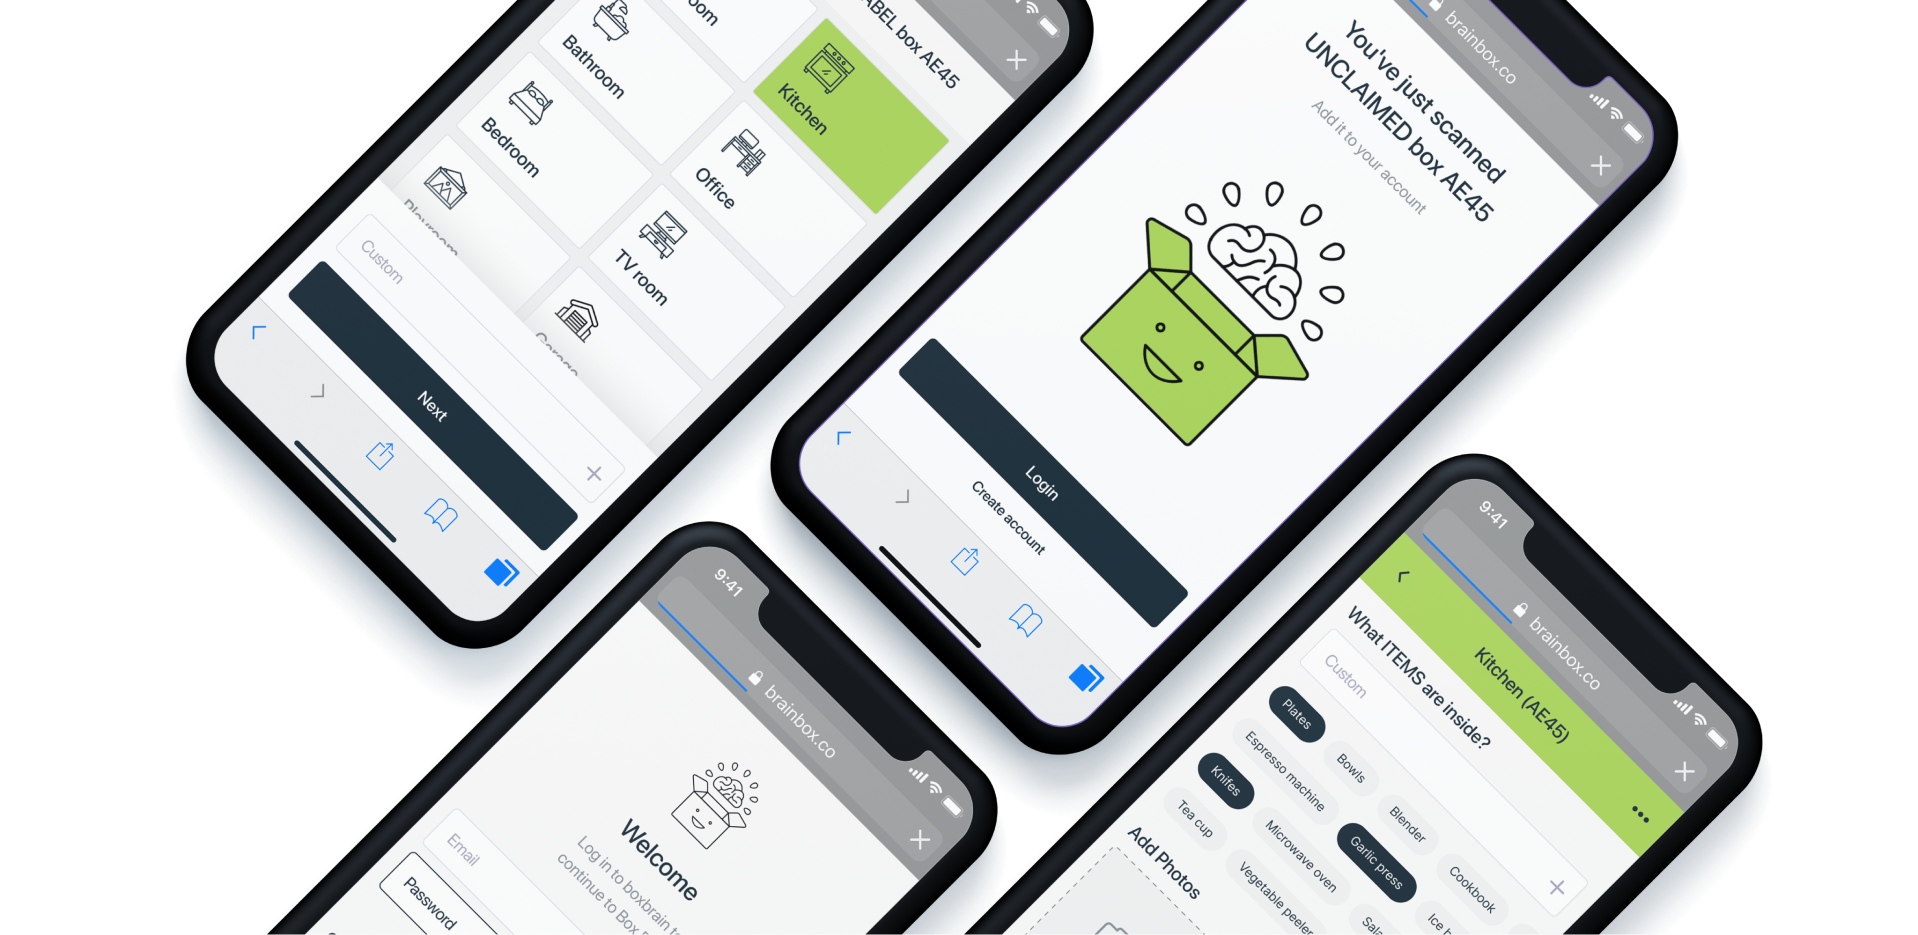 Boxbrain mobile web application pack smarter progressive web app screens